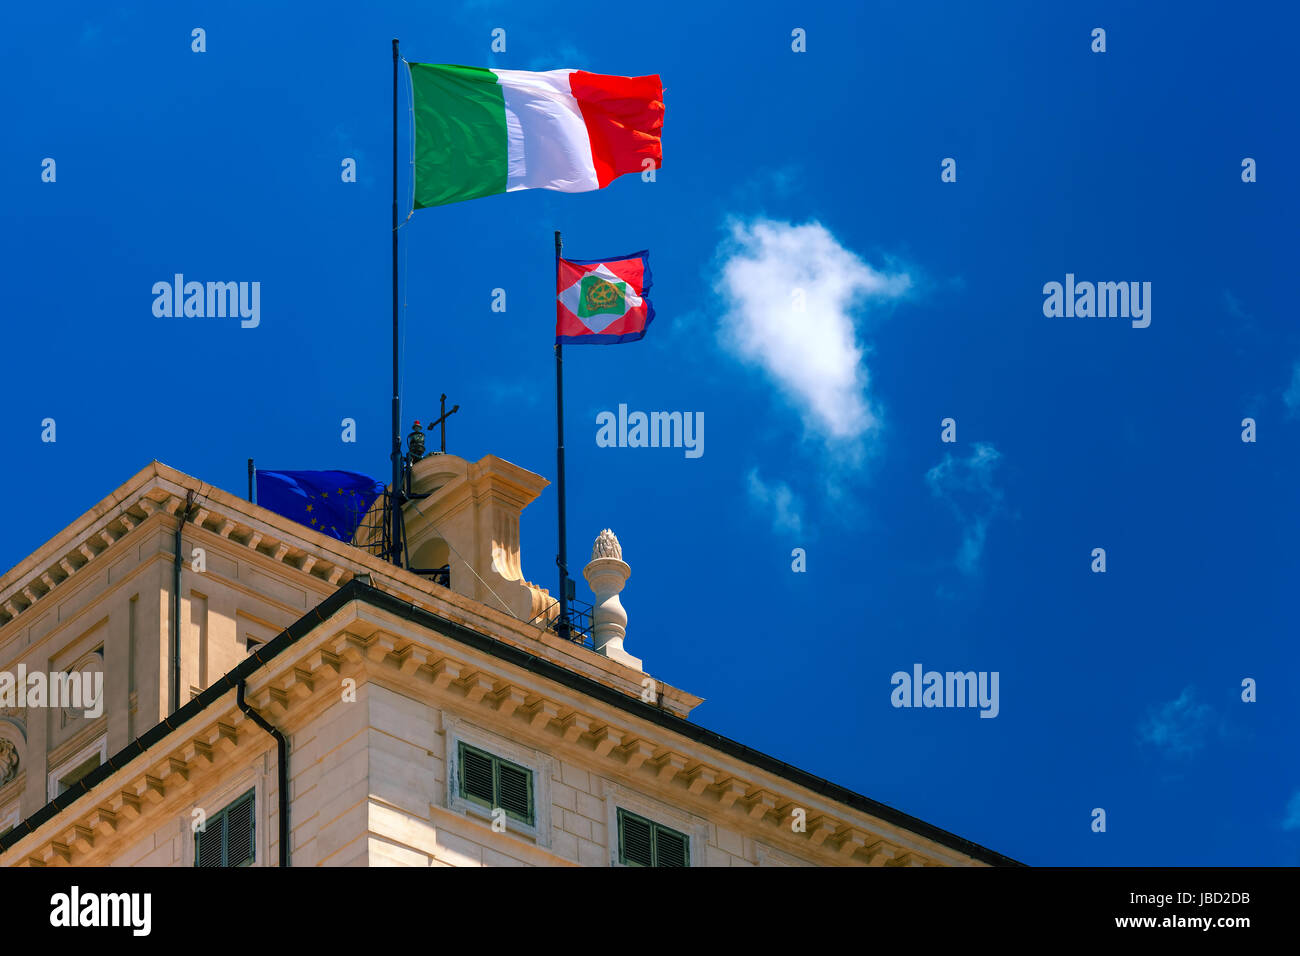 Italian flag and Presidential pennant, Rome, Italy Stock Photo